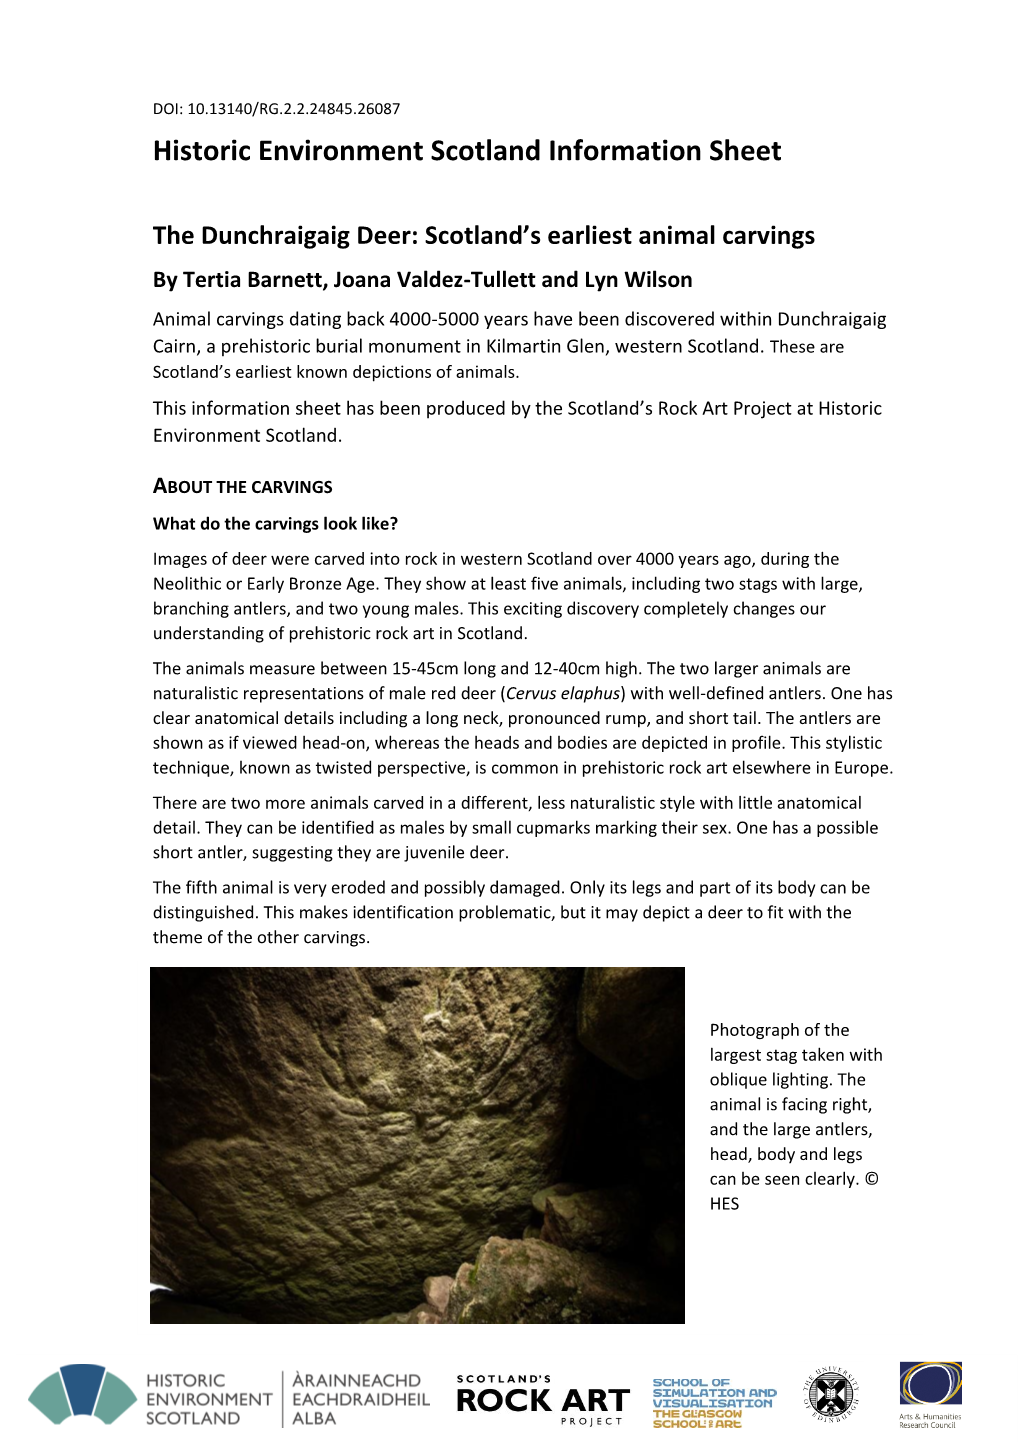 The Dunchraigaig Deer: Scotland's Earliest Animal Carvings